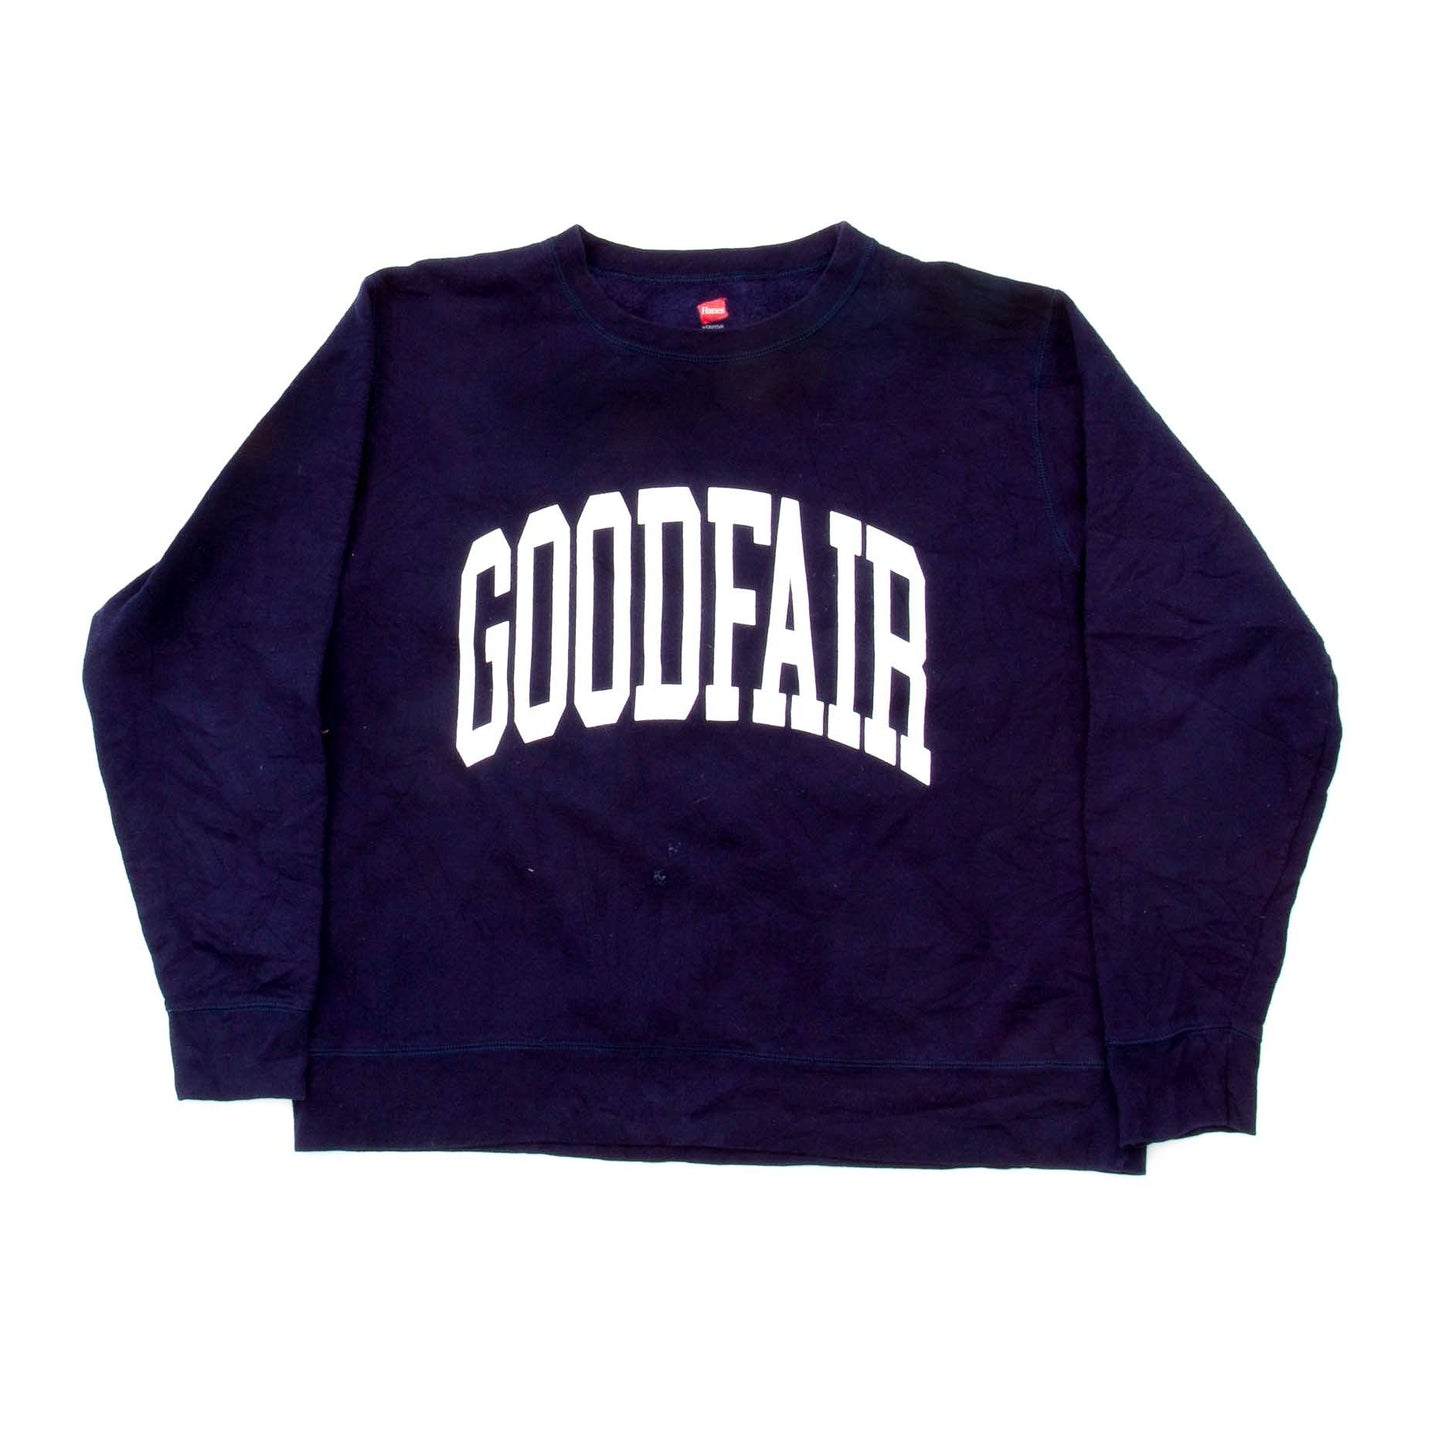 Goodfair Collegiate Sweatshirt Sweatshirts & Sweaters Goodfair 